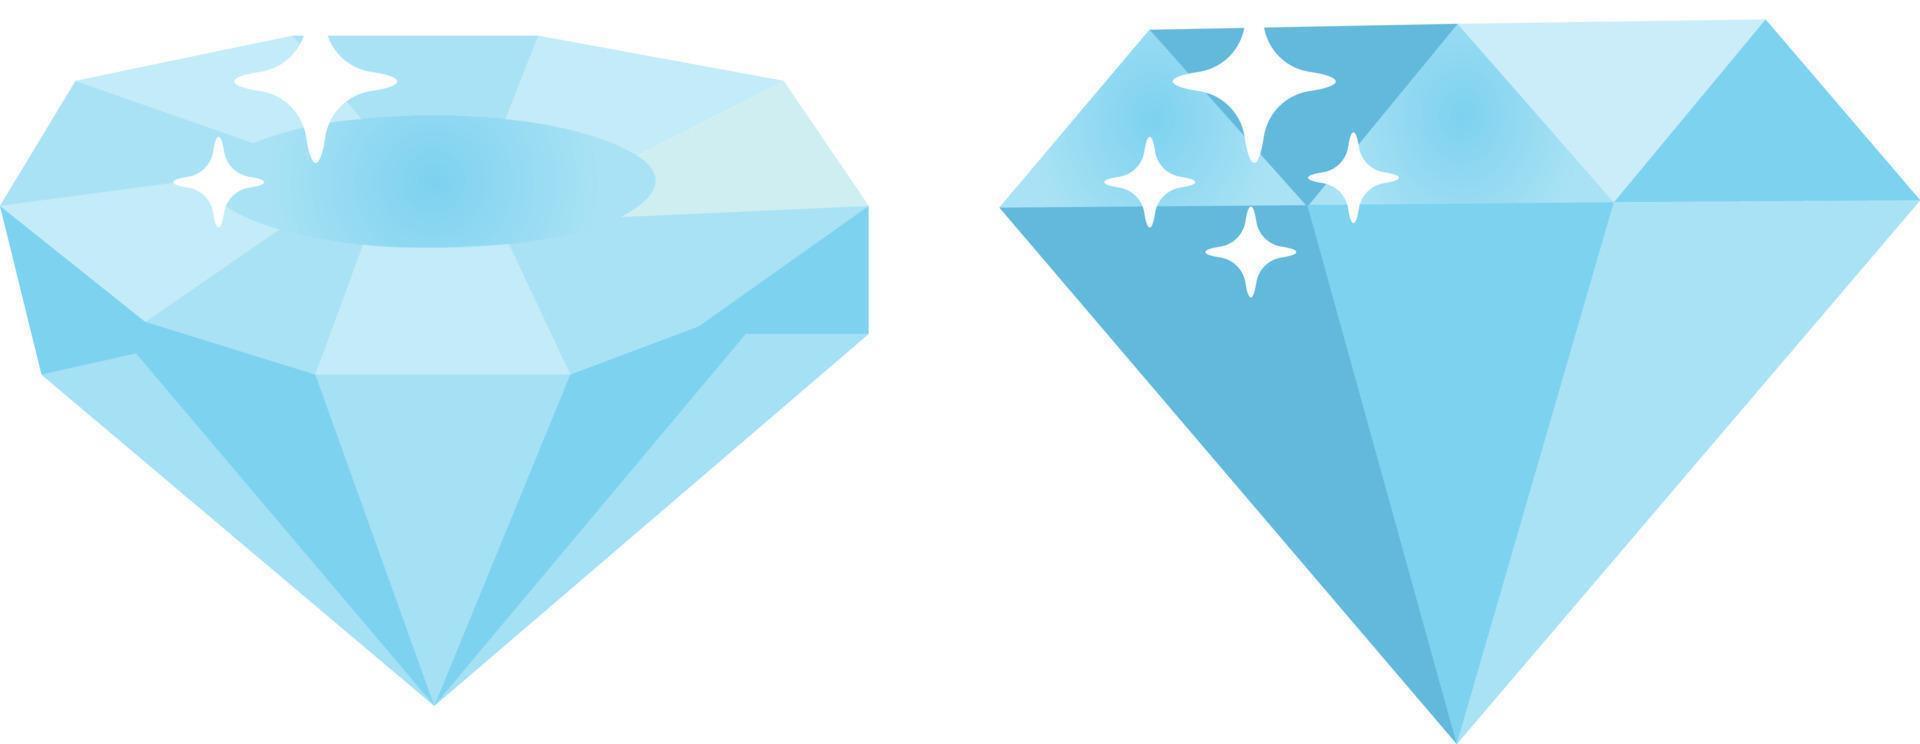 diamante azul, ilustración, vector sobre fondo blanco.